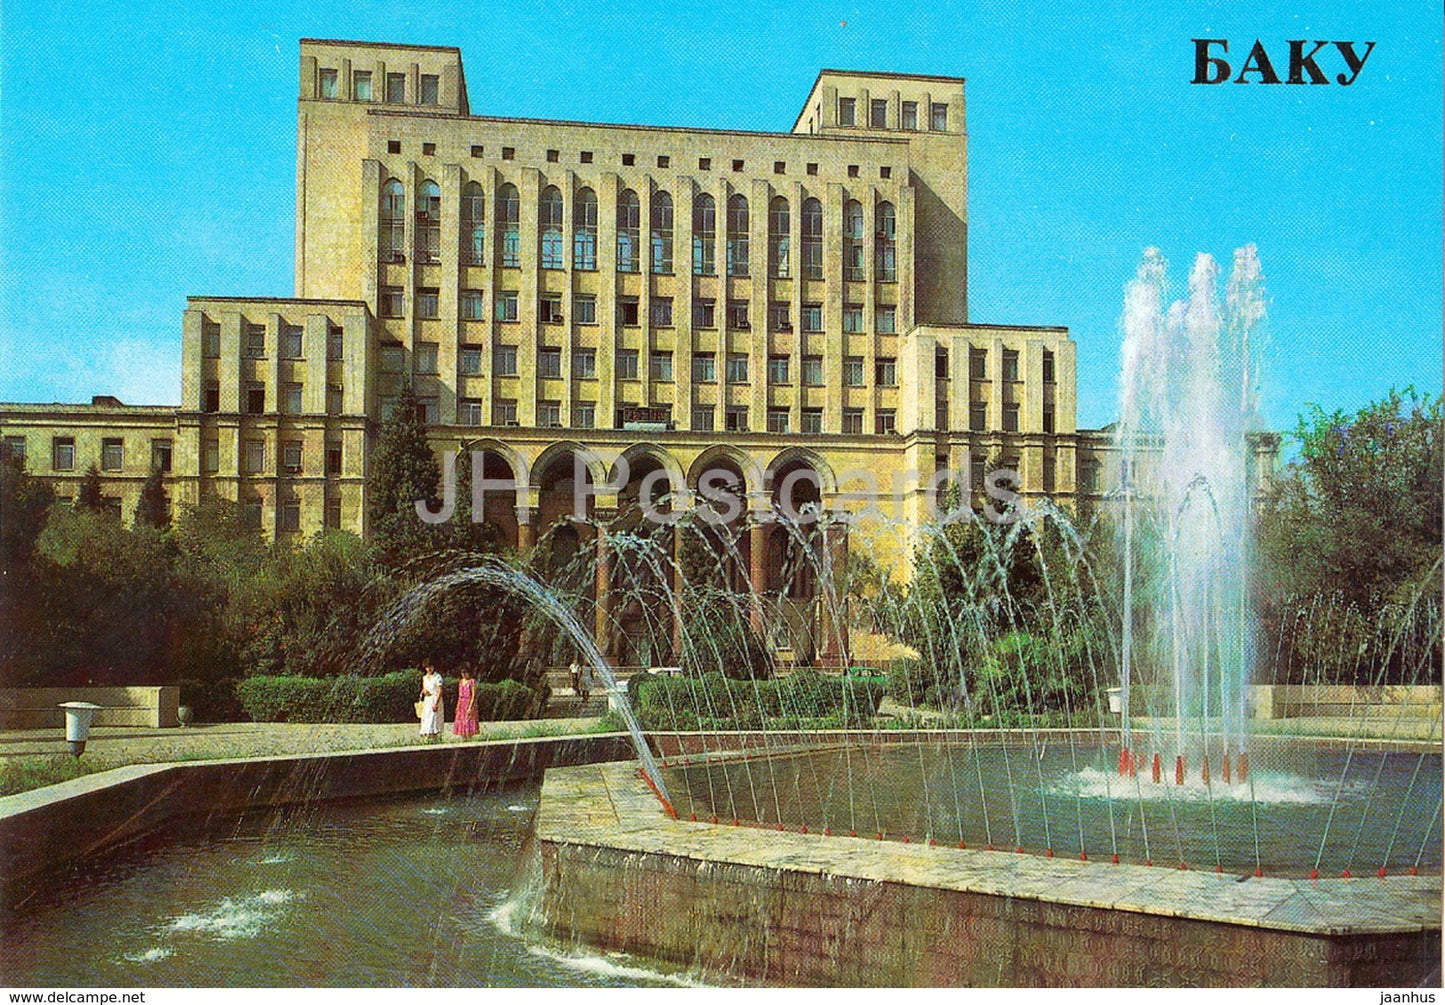 Baku - The Academy of Sciences of the Azerbaijan SSR - 1985 - Azerbaijan USSR - unused